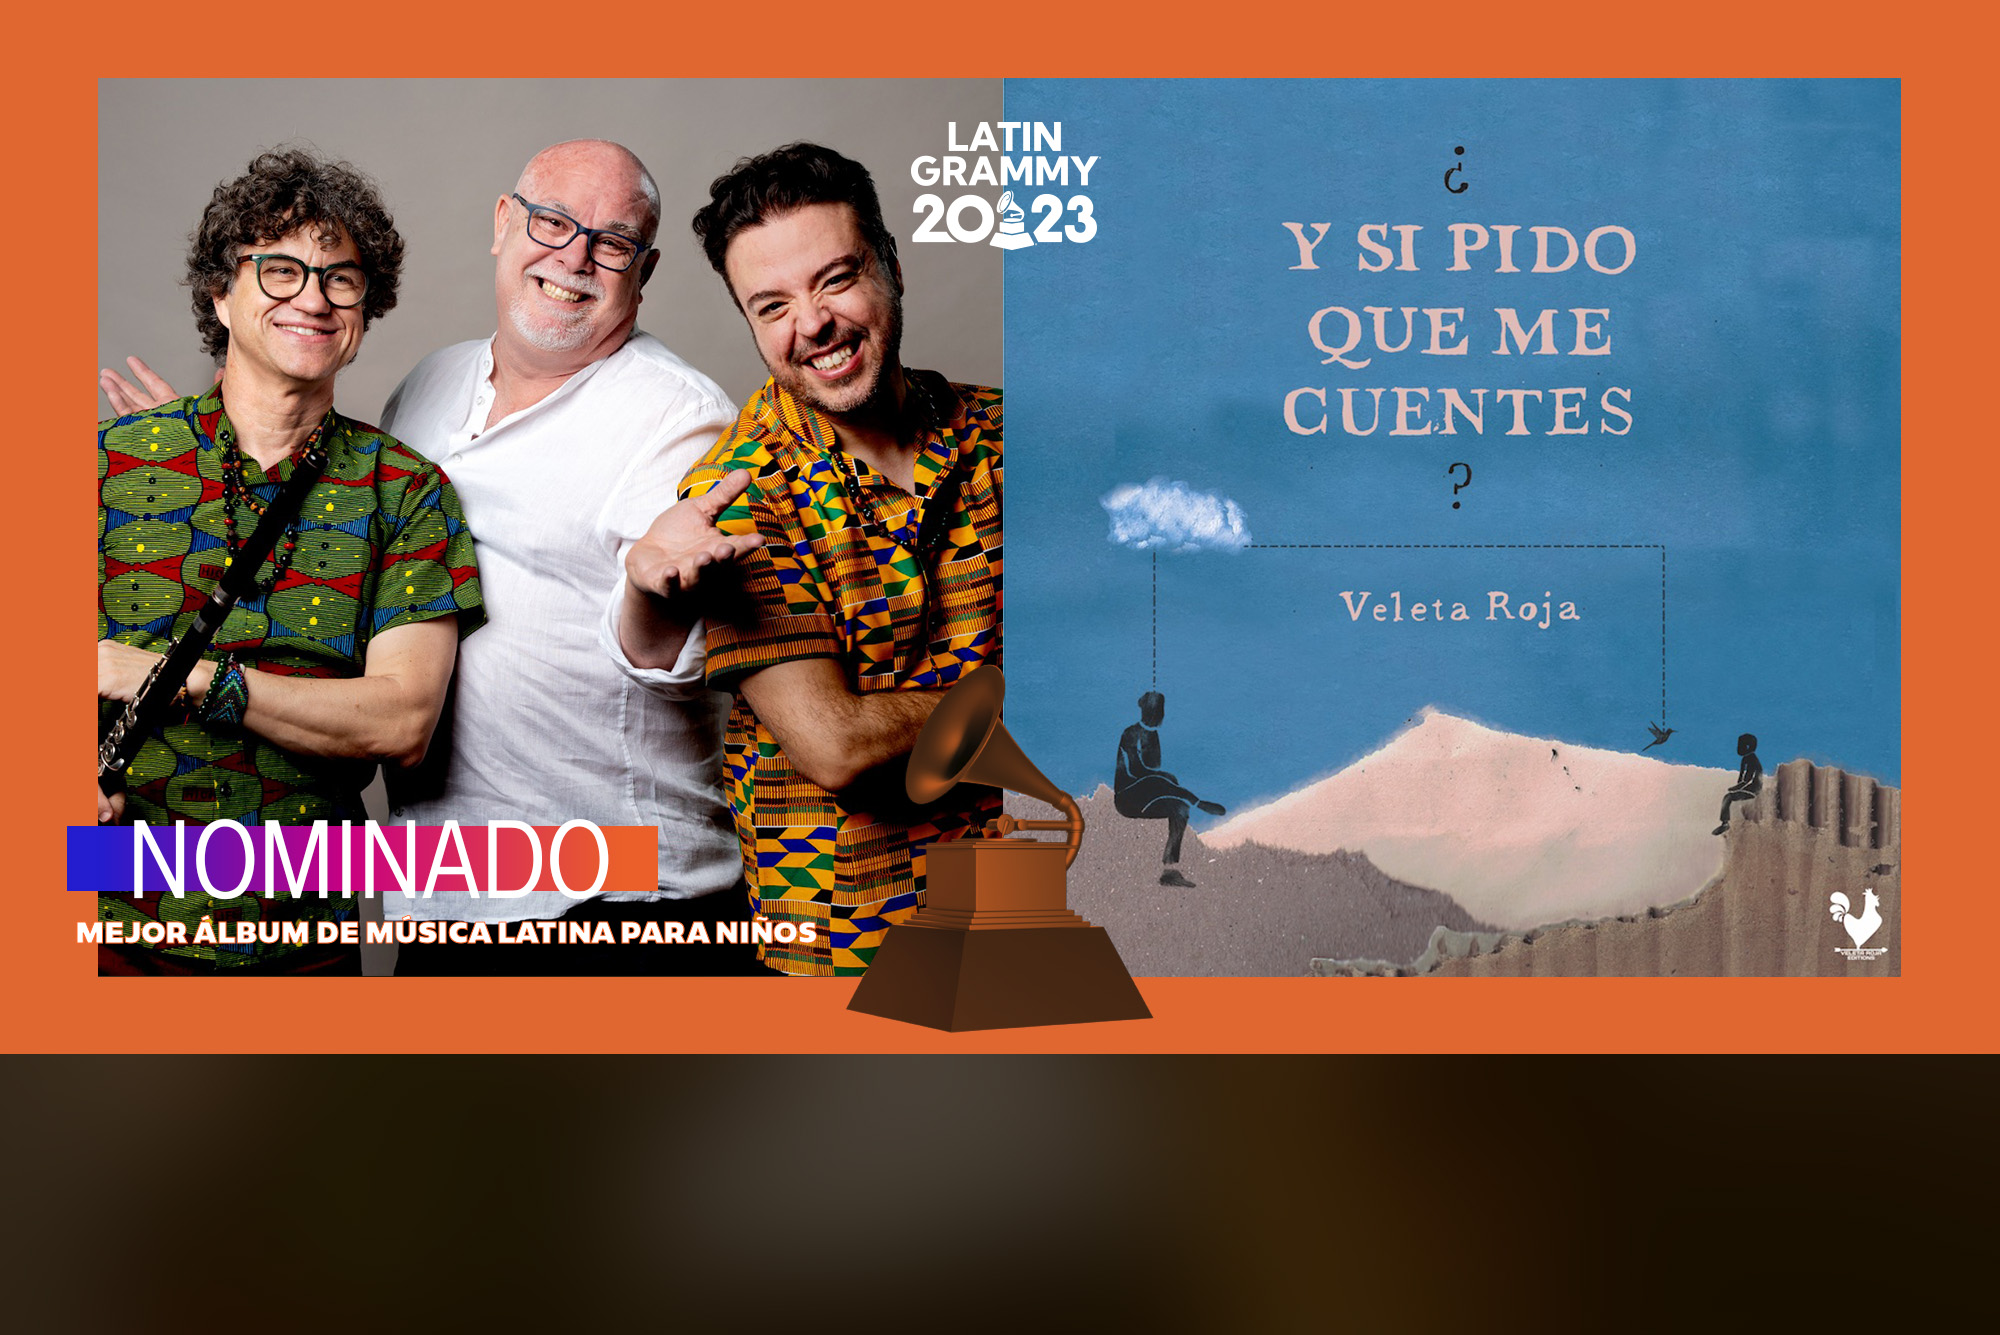 Latin Grammy 2023